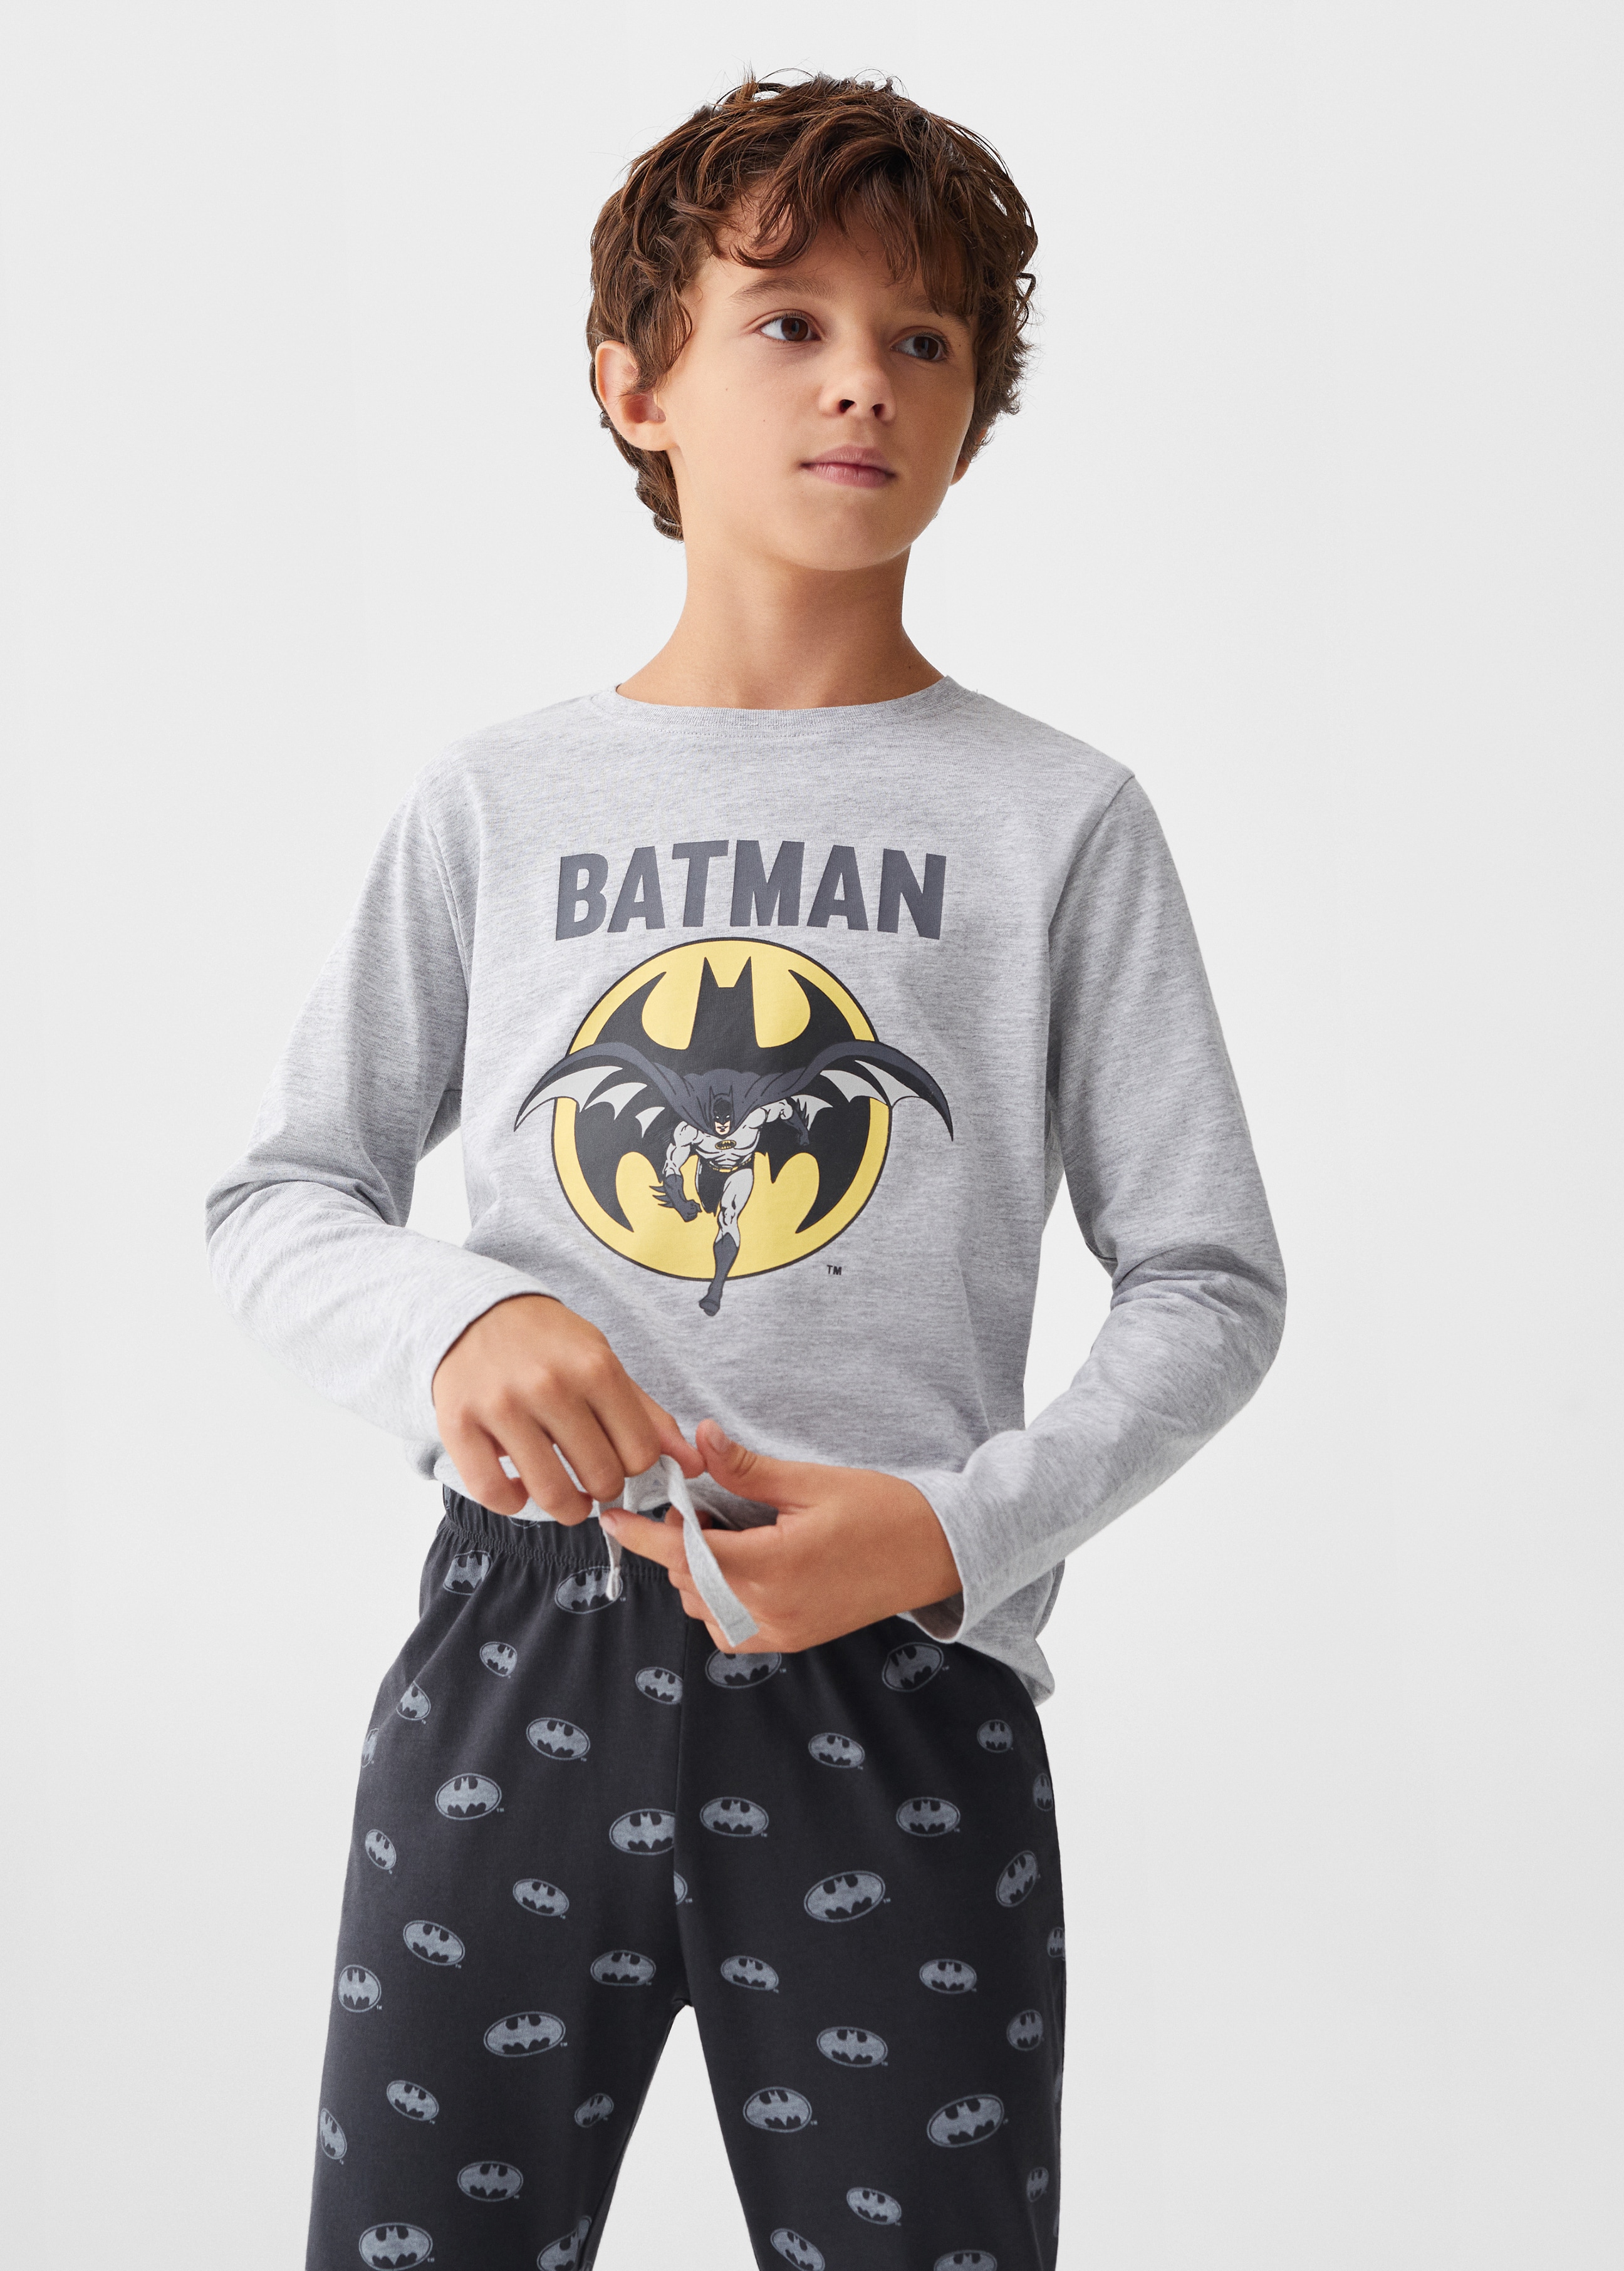 Pijama largo Batman - Plano medio